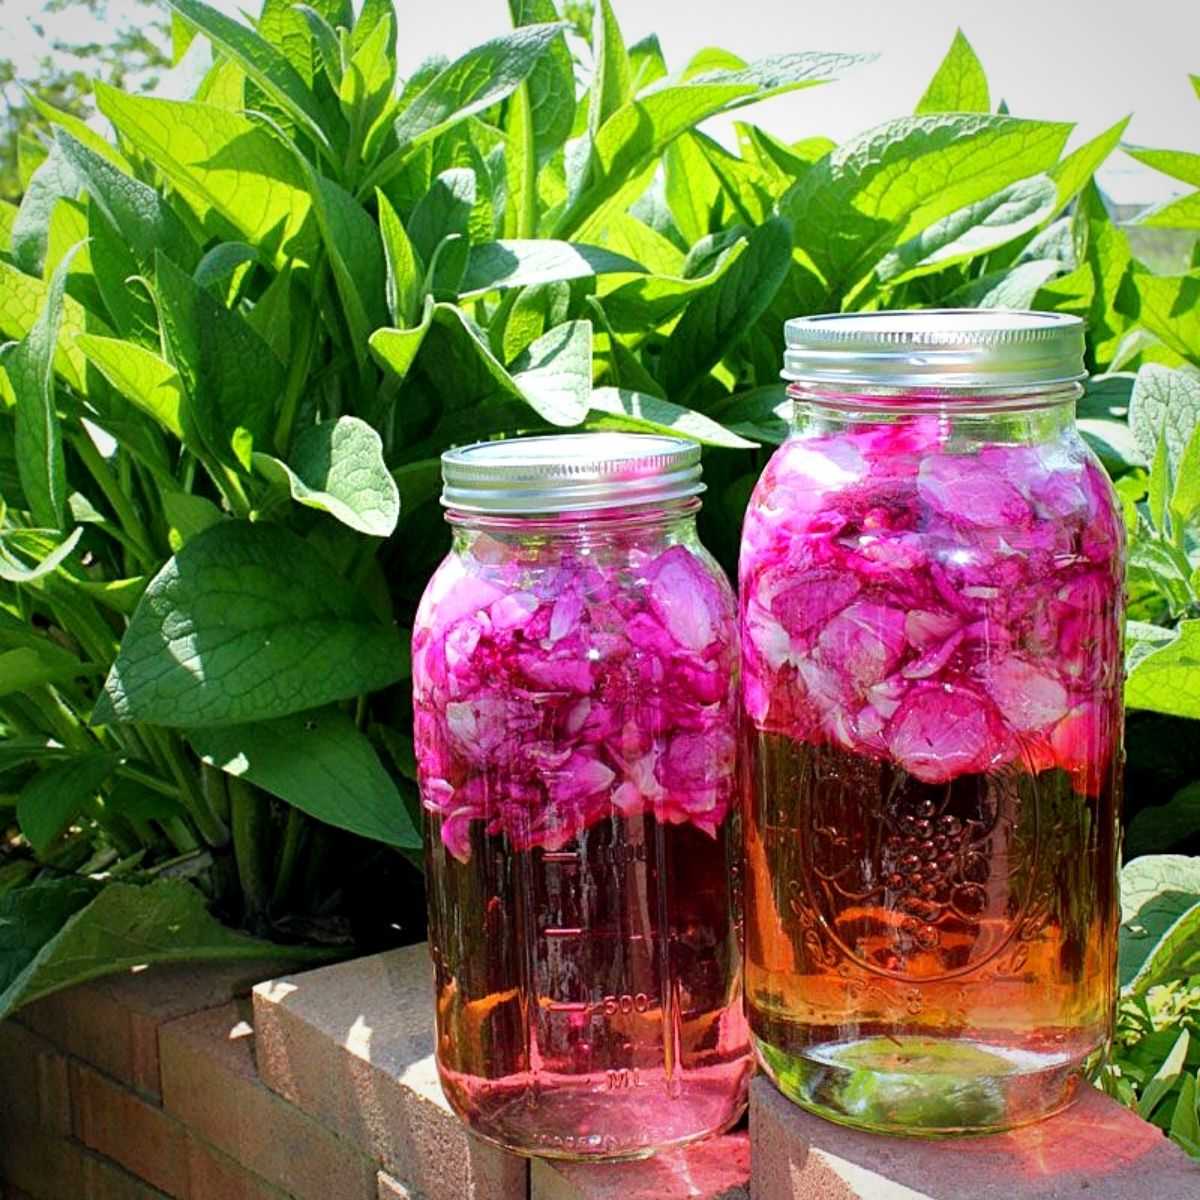 Flowers in Traditional Herbal Medicine